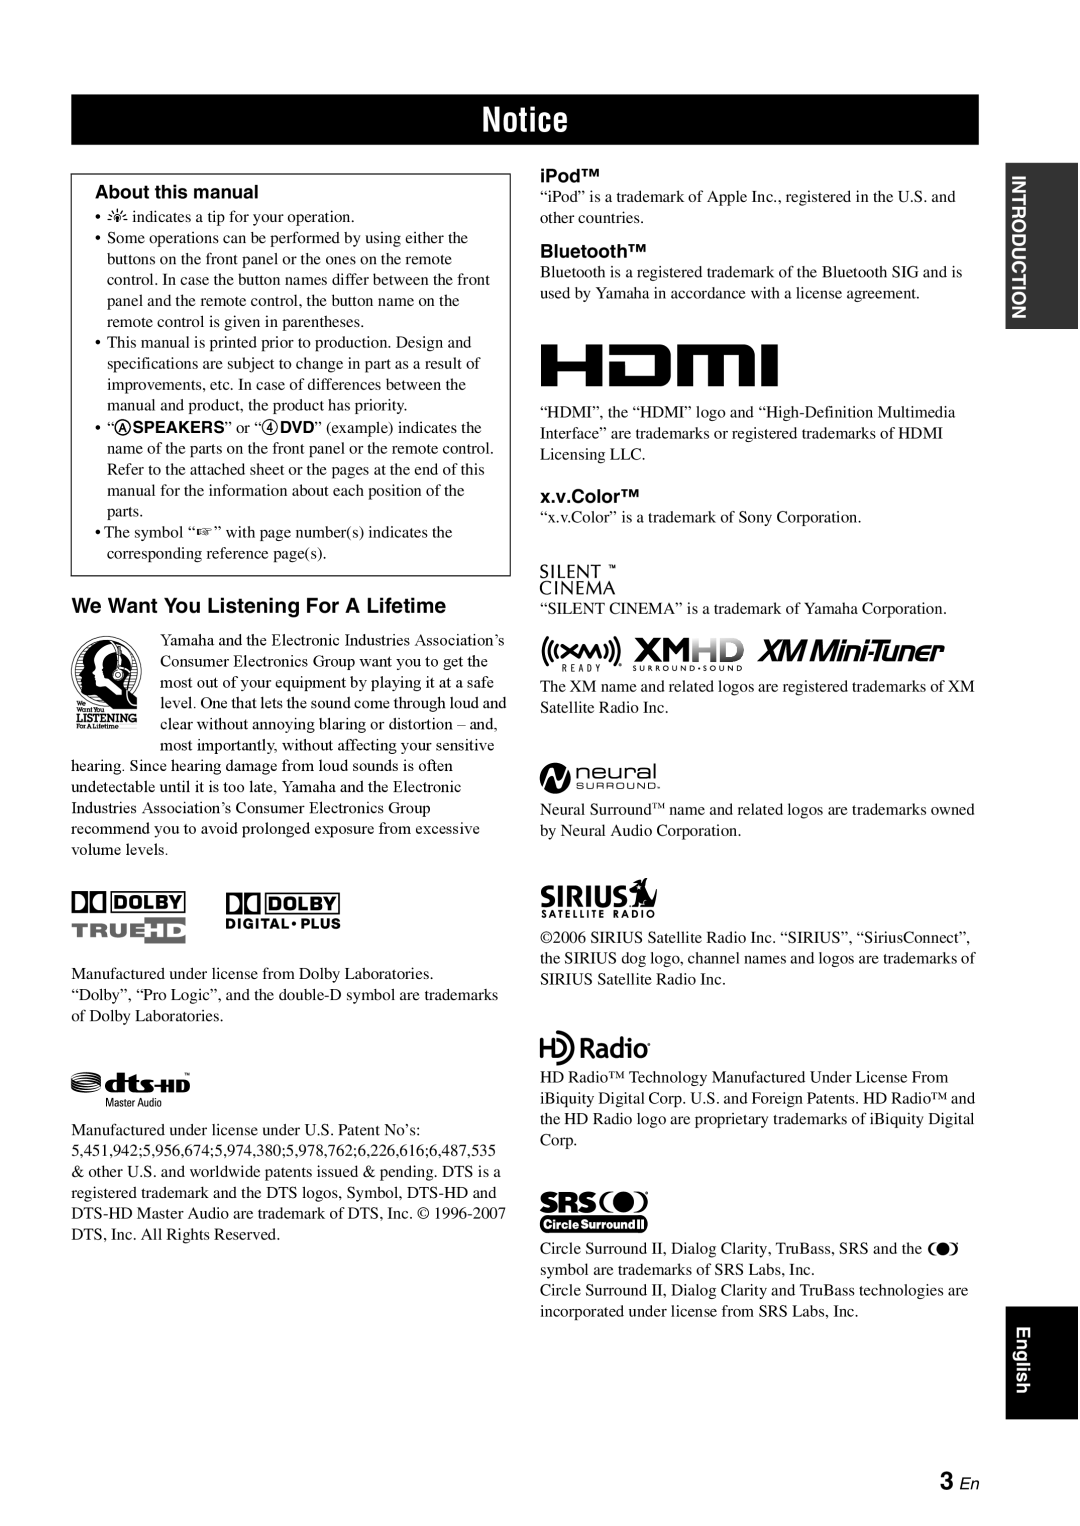 Yamaha HTR-6180 owner manual Notice, 3 En, We Want You Listening For A Lifetime 